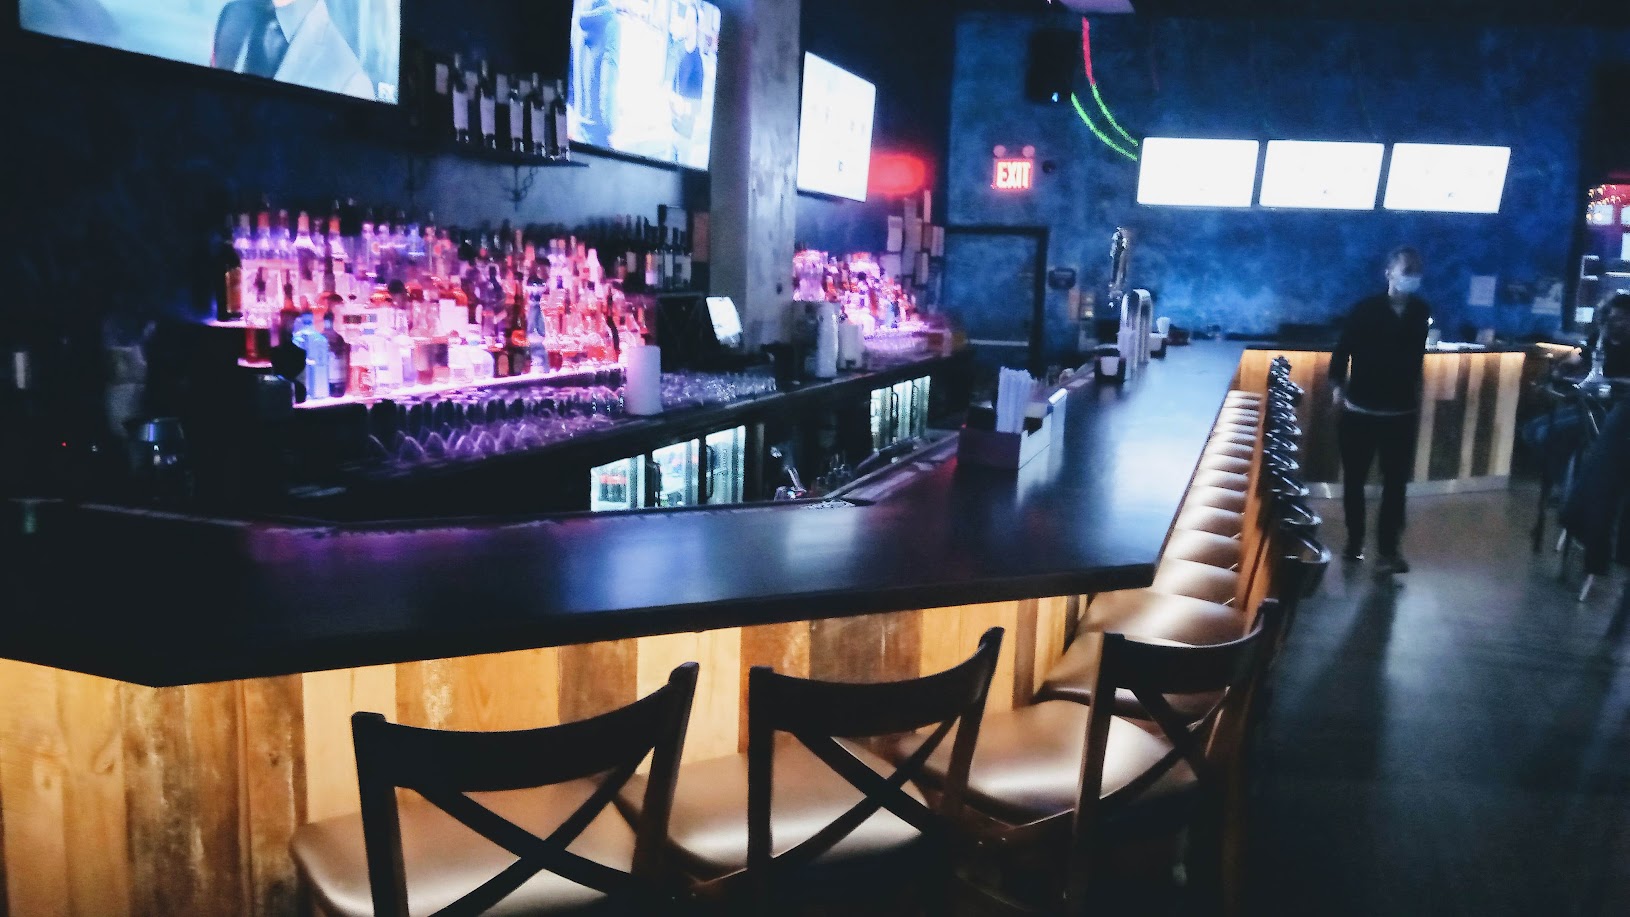 SET Lounge Bar & Billiards